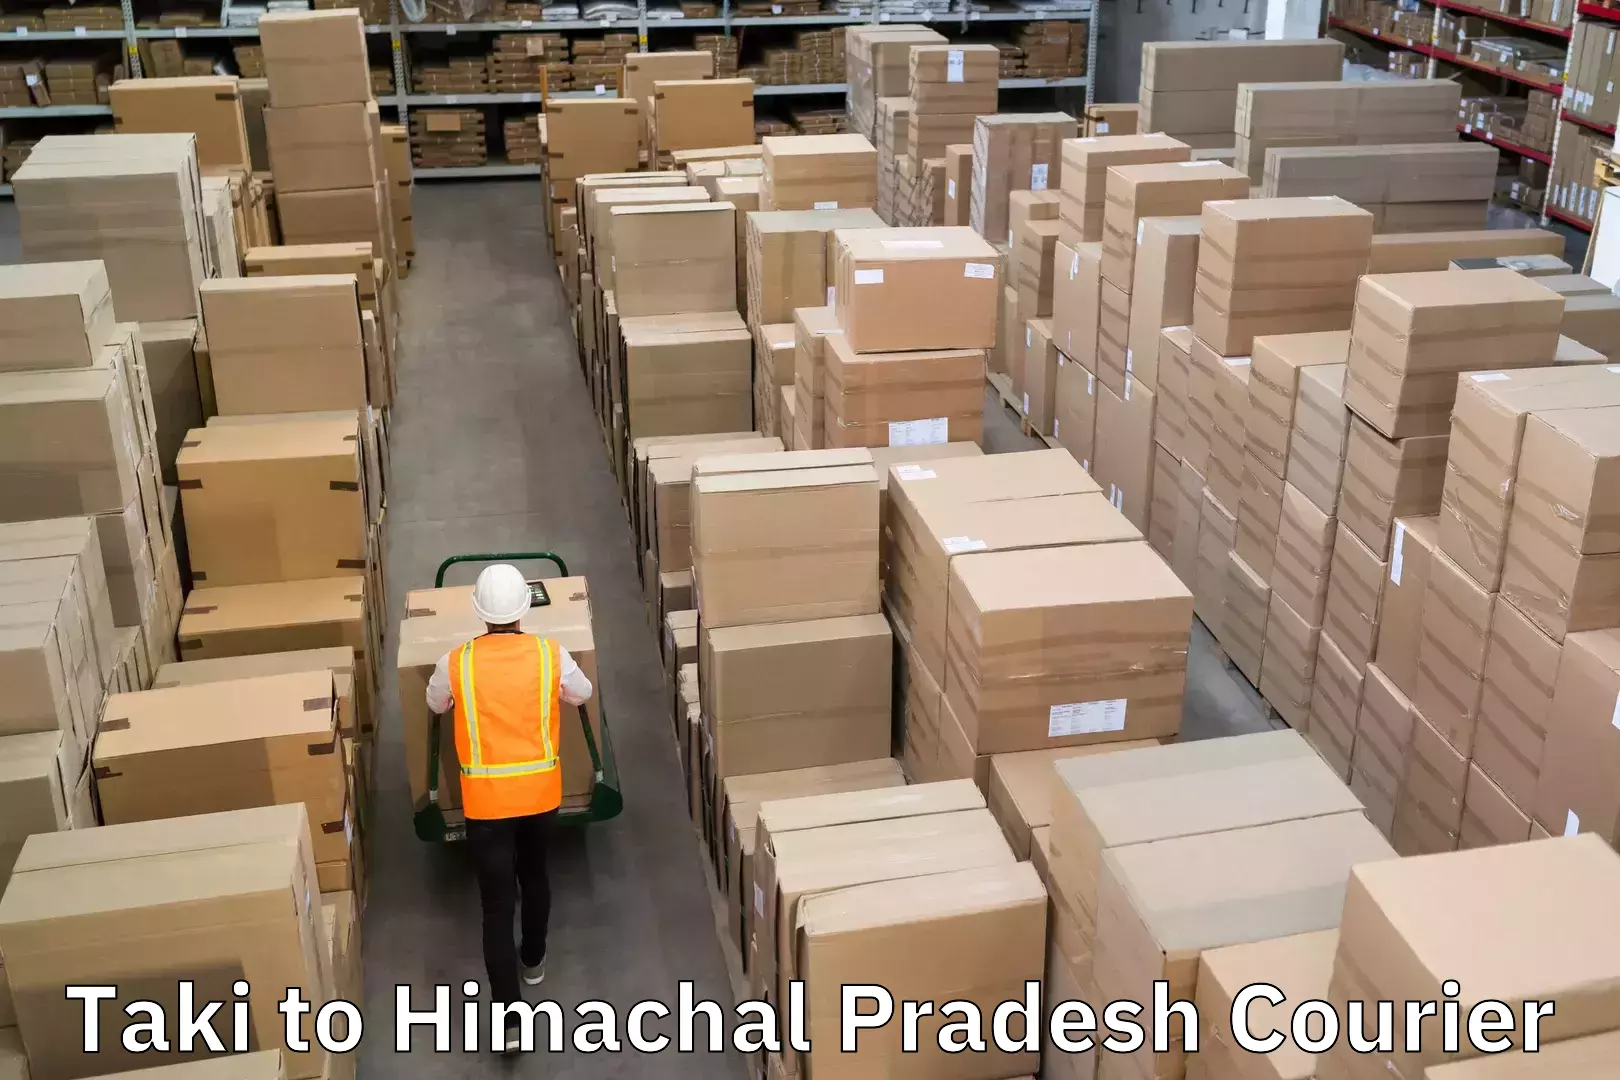 High-capacity parcel service Taki to Himachal Pradesh